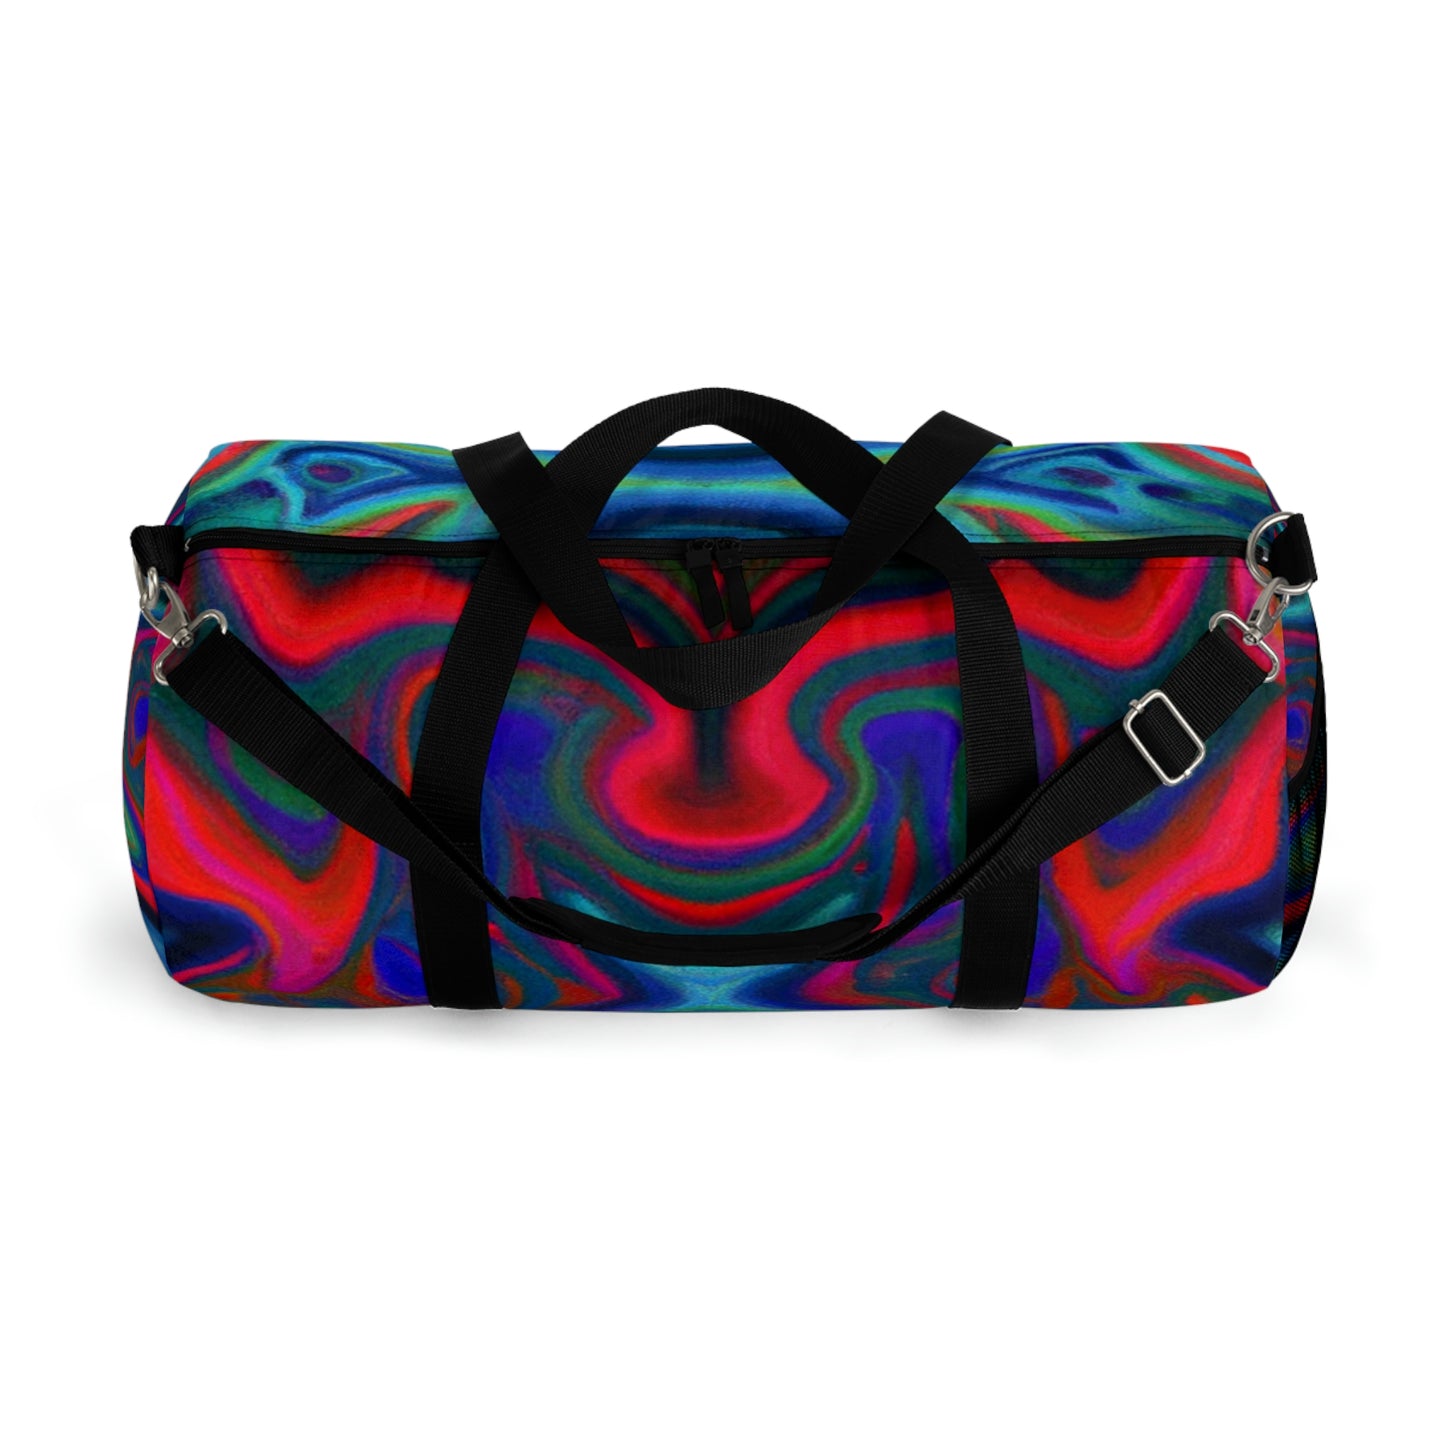 Lorcanino - Psychedelic Duffel Bag